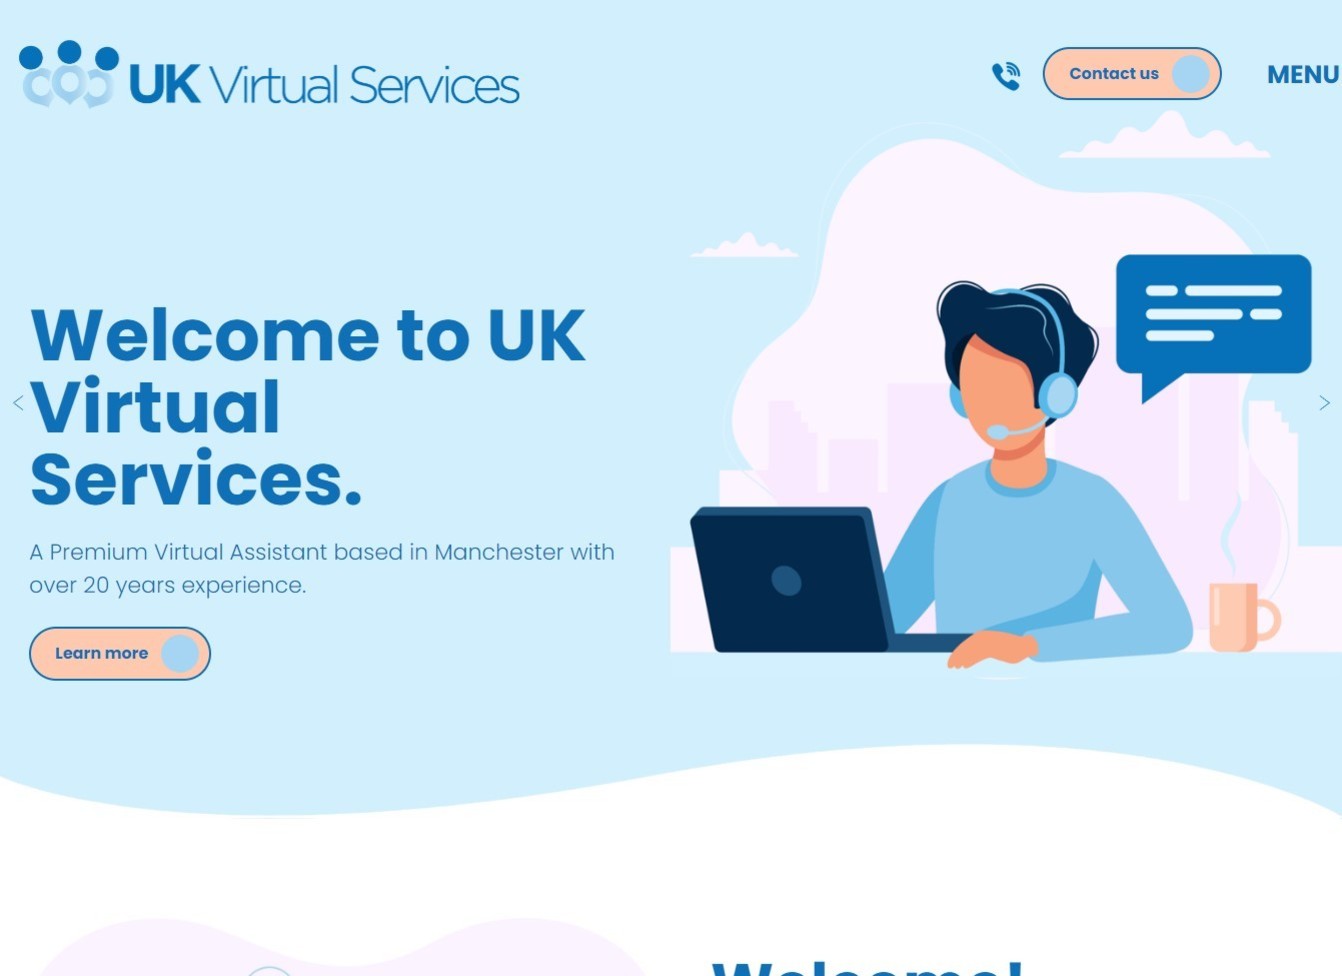 UK Virtual Services website